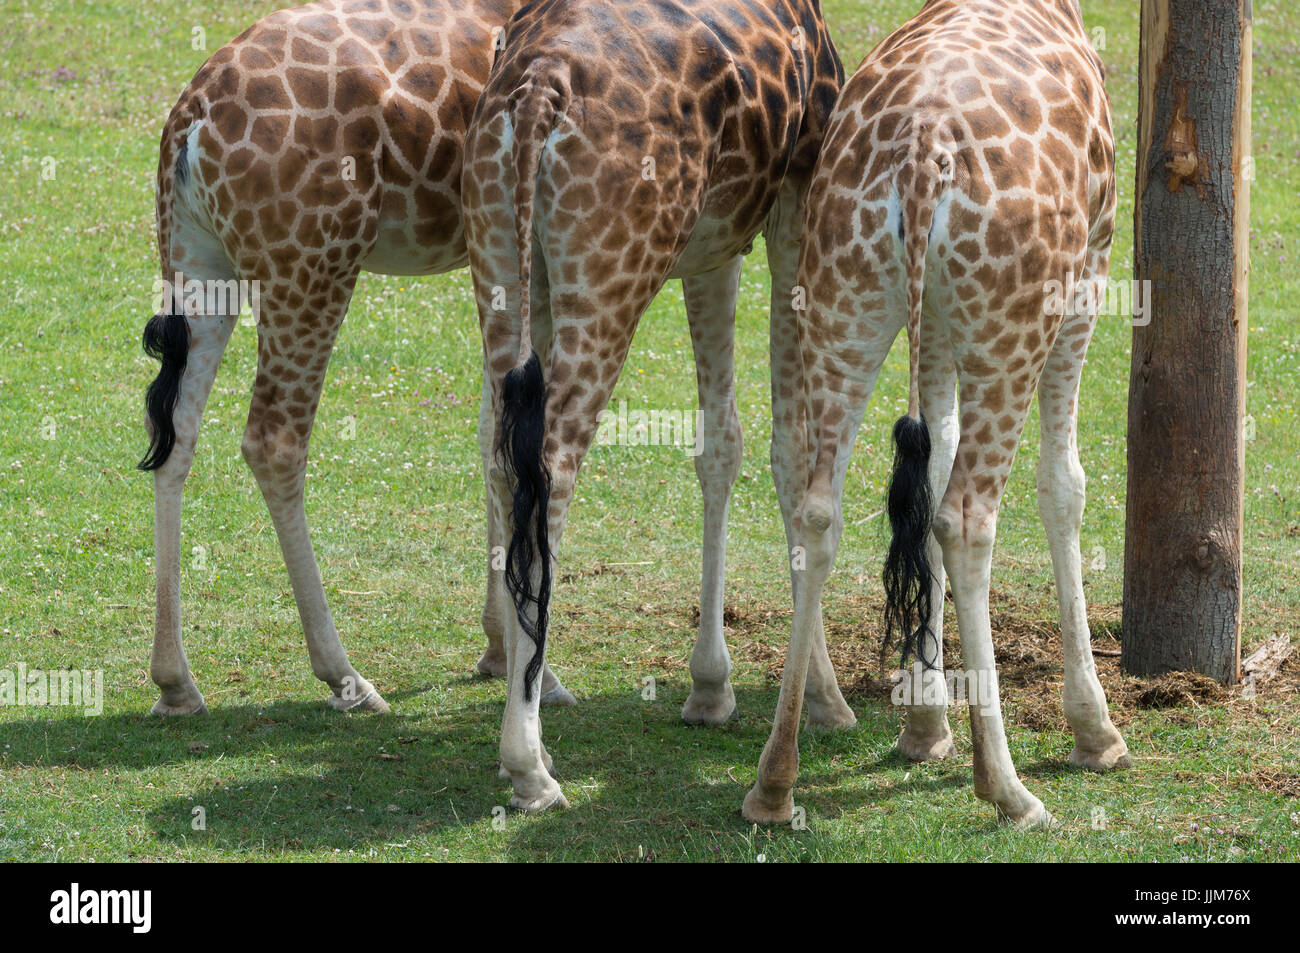 Giraffe in Gefangenschaft Stockfoto